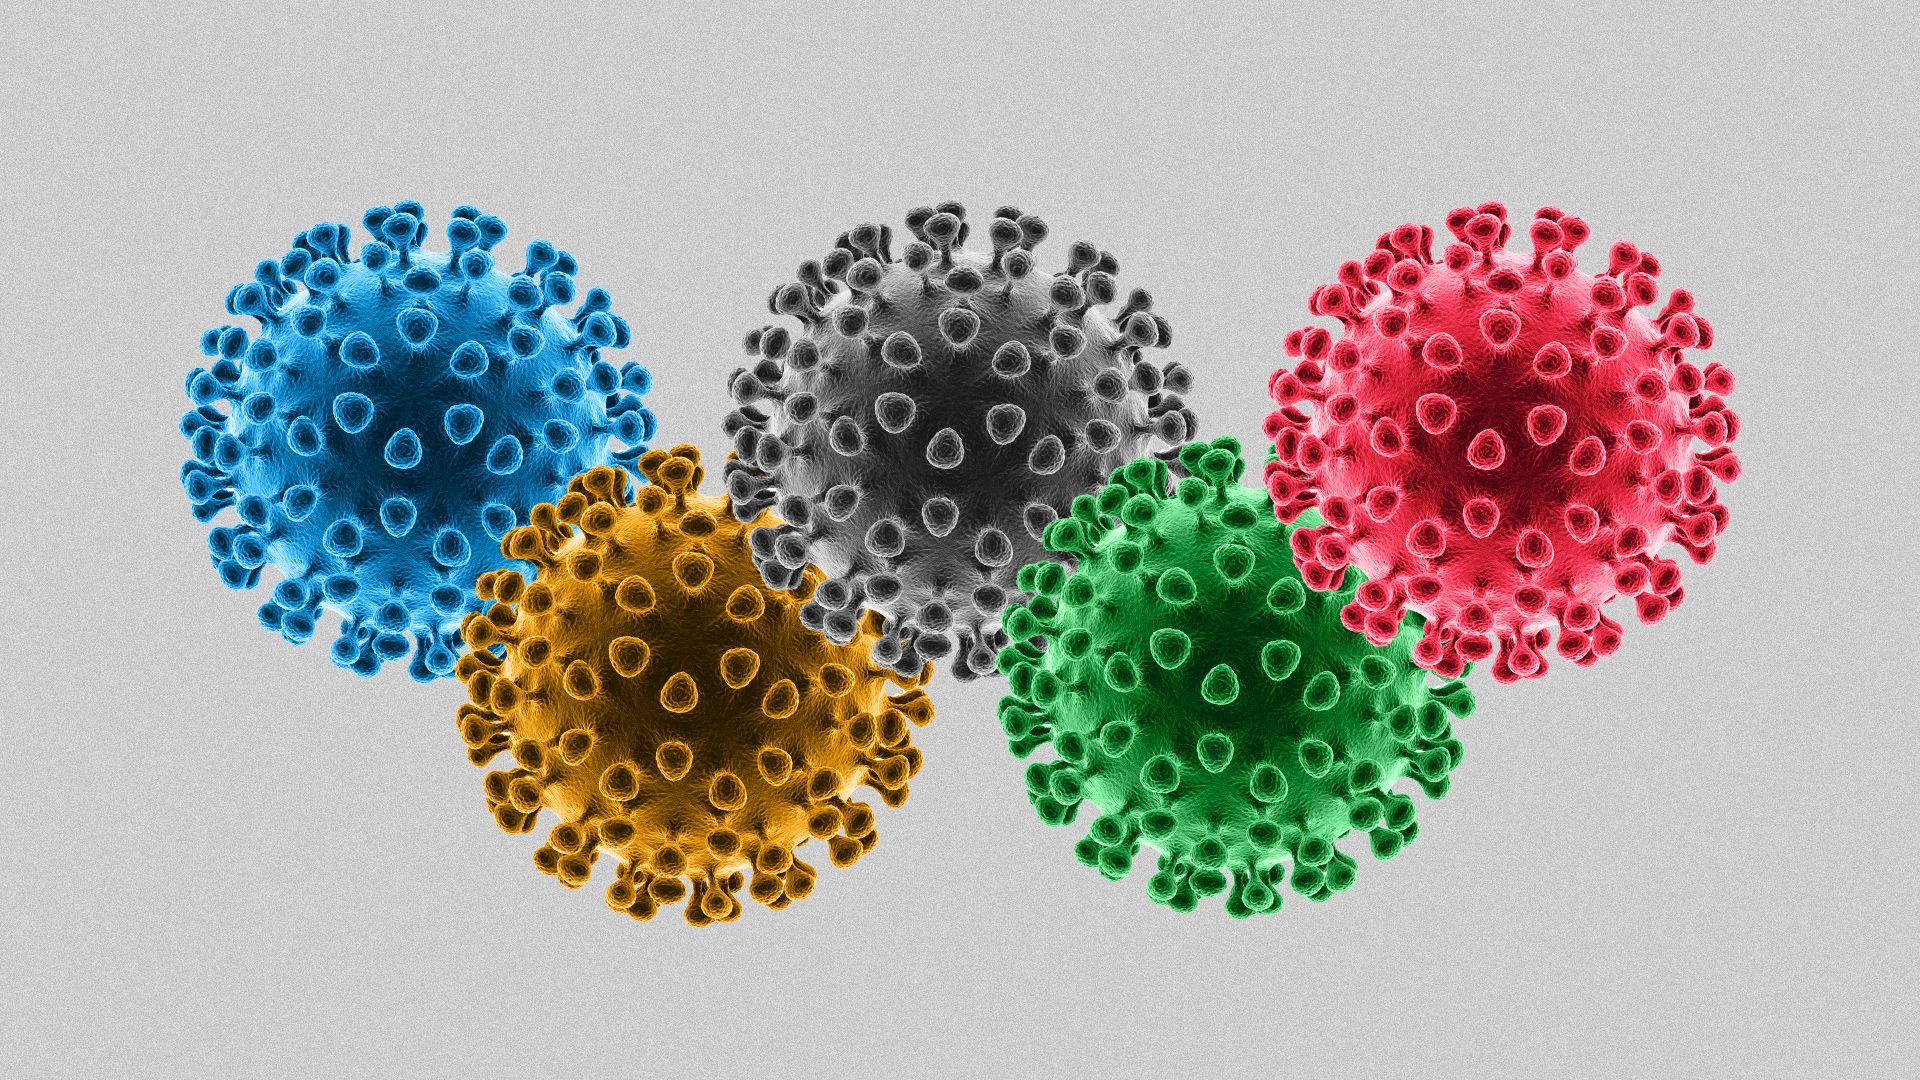 Illustration of coronavirus arranged like the Olympic rings